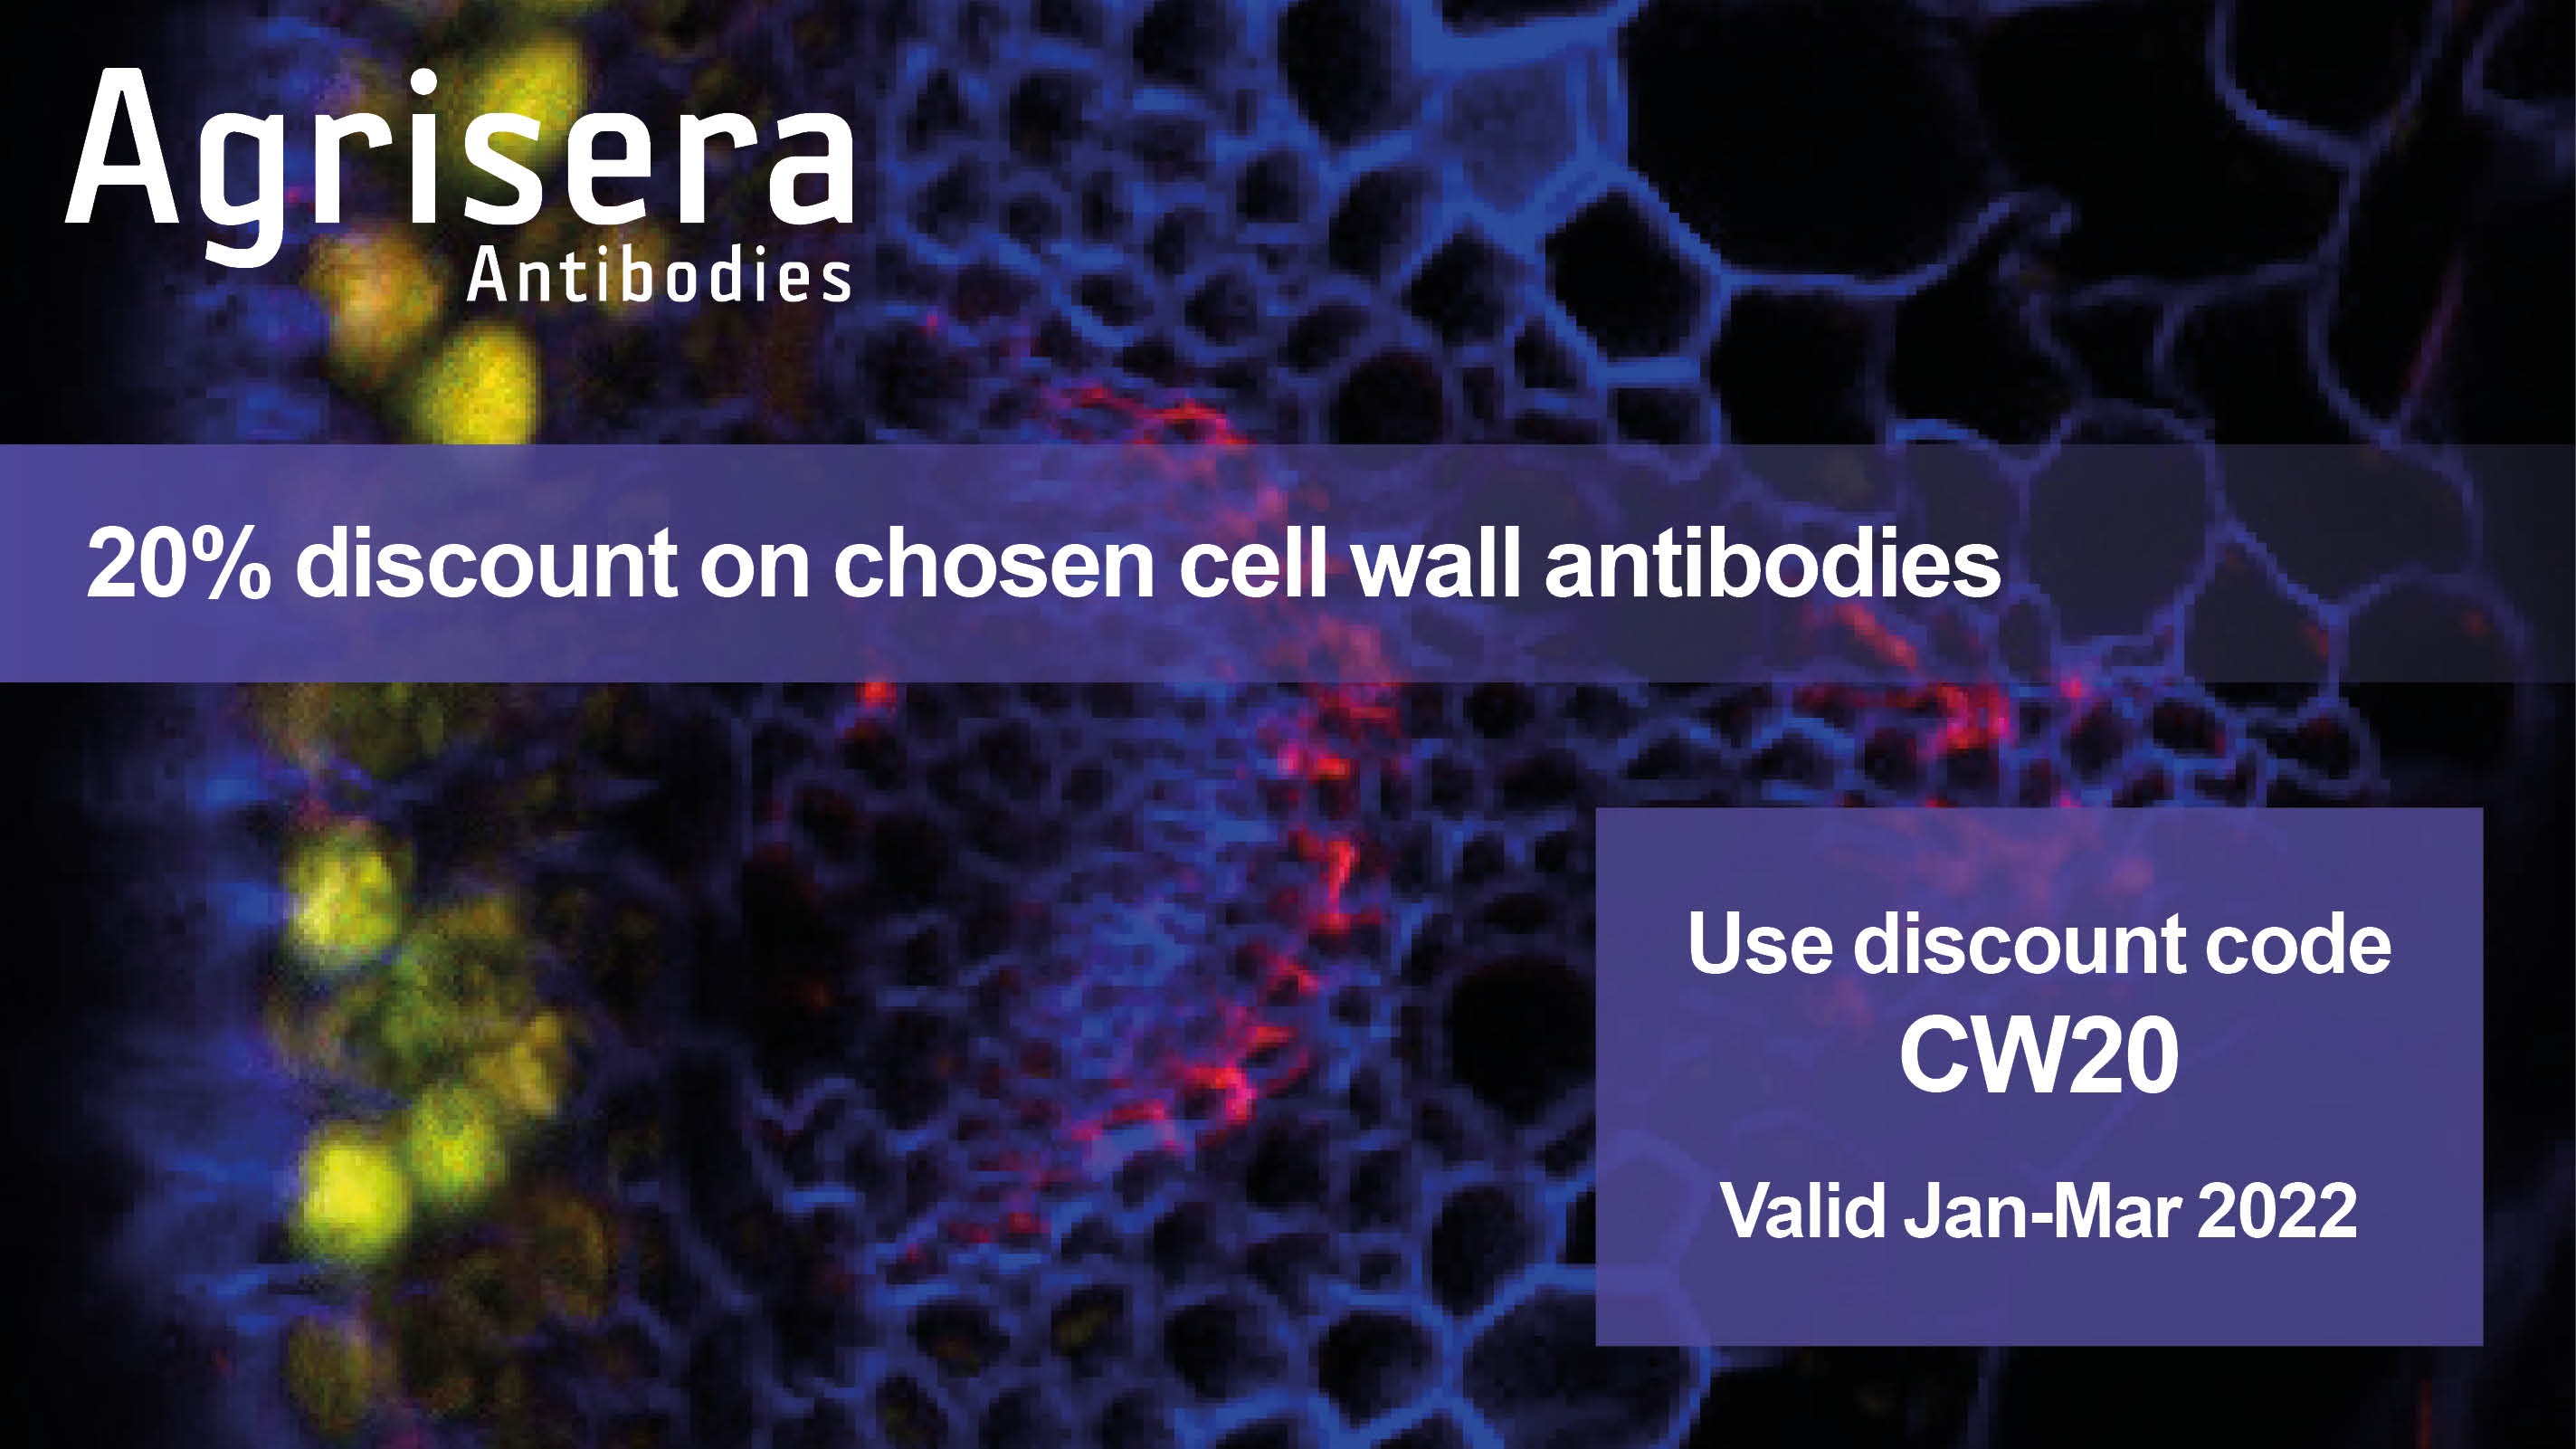 Agrisera Cell Wall Antibody Promo